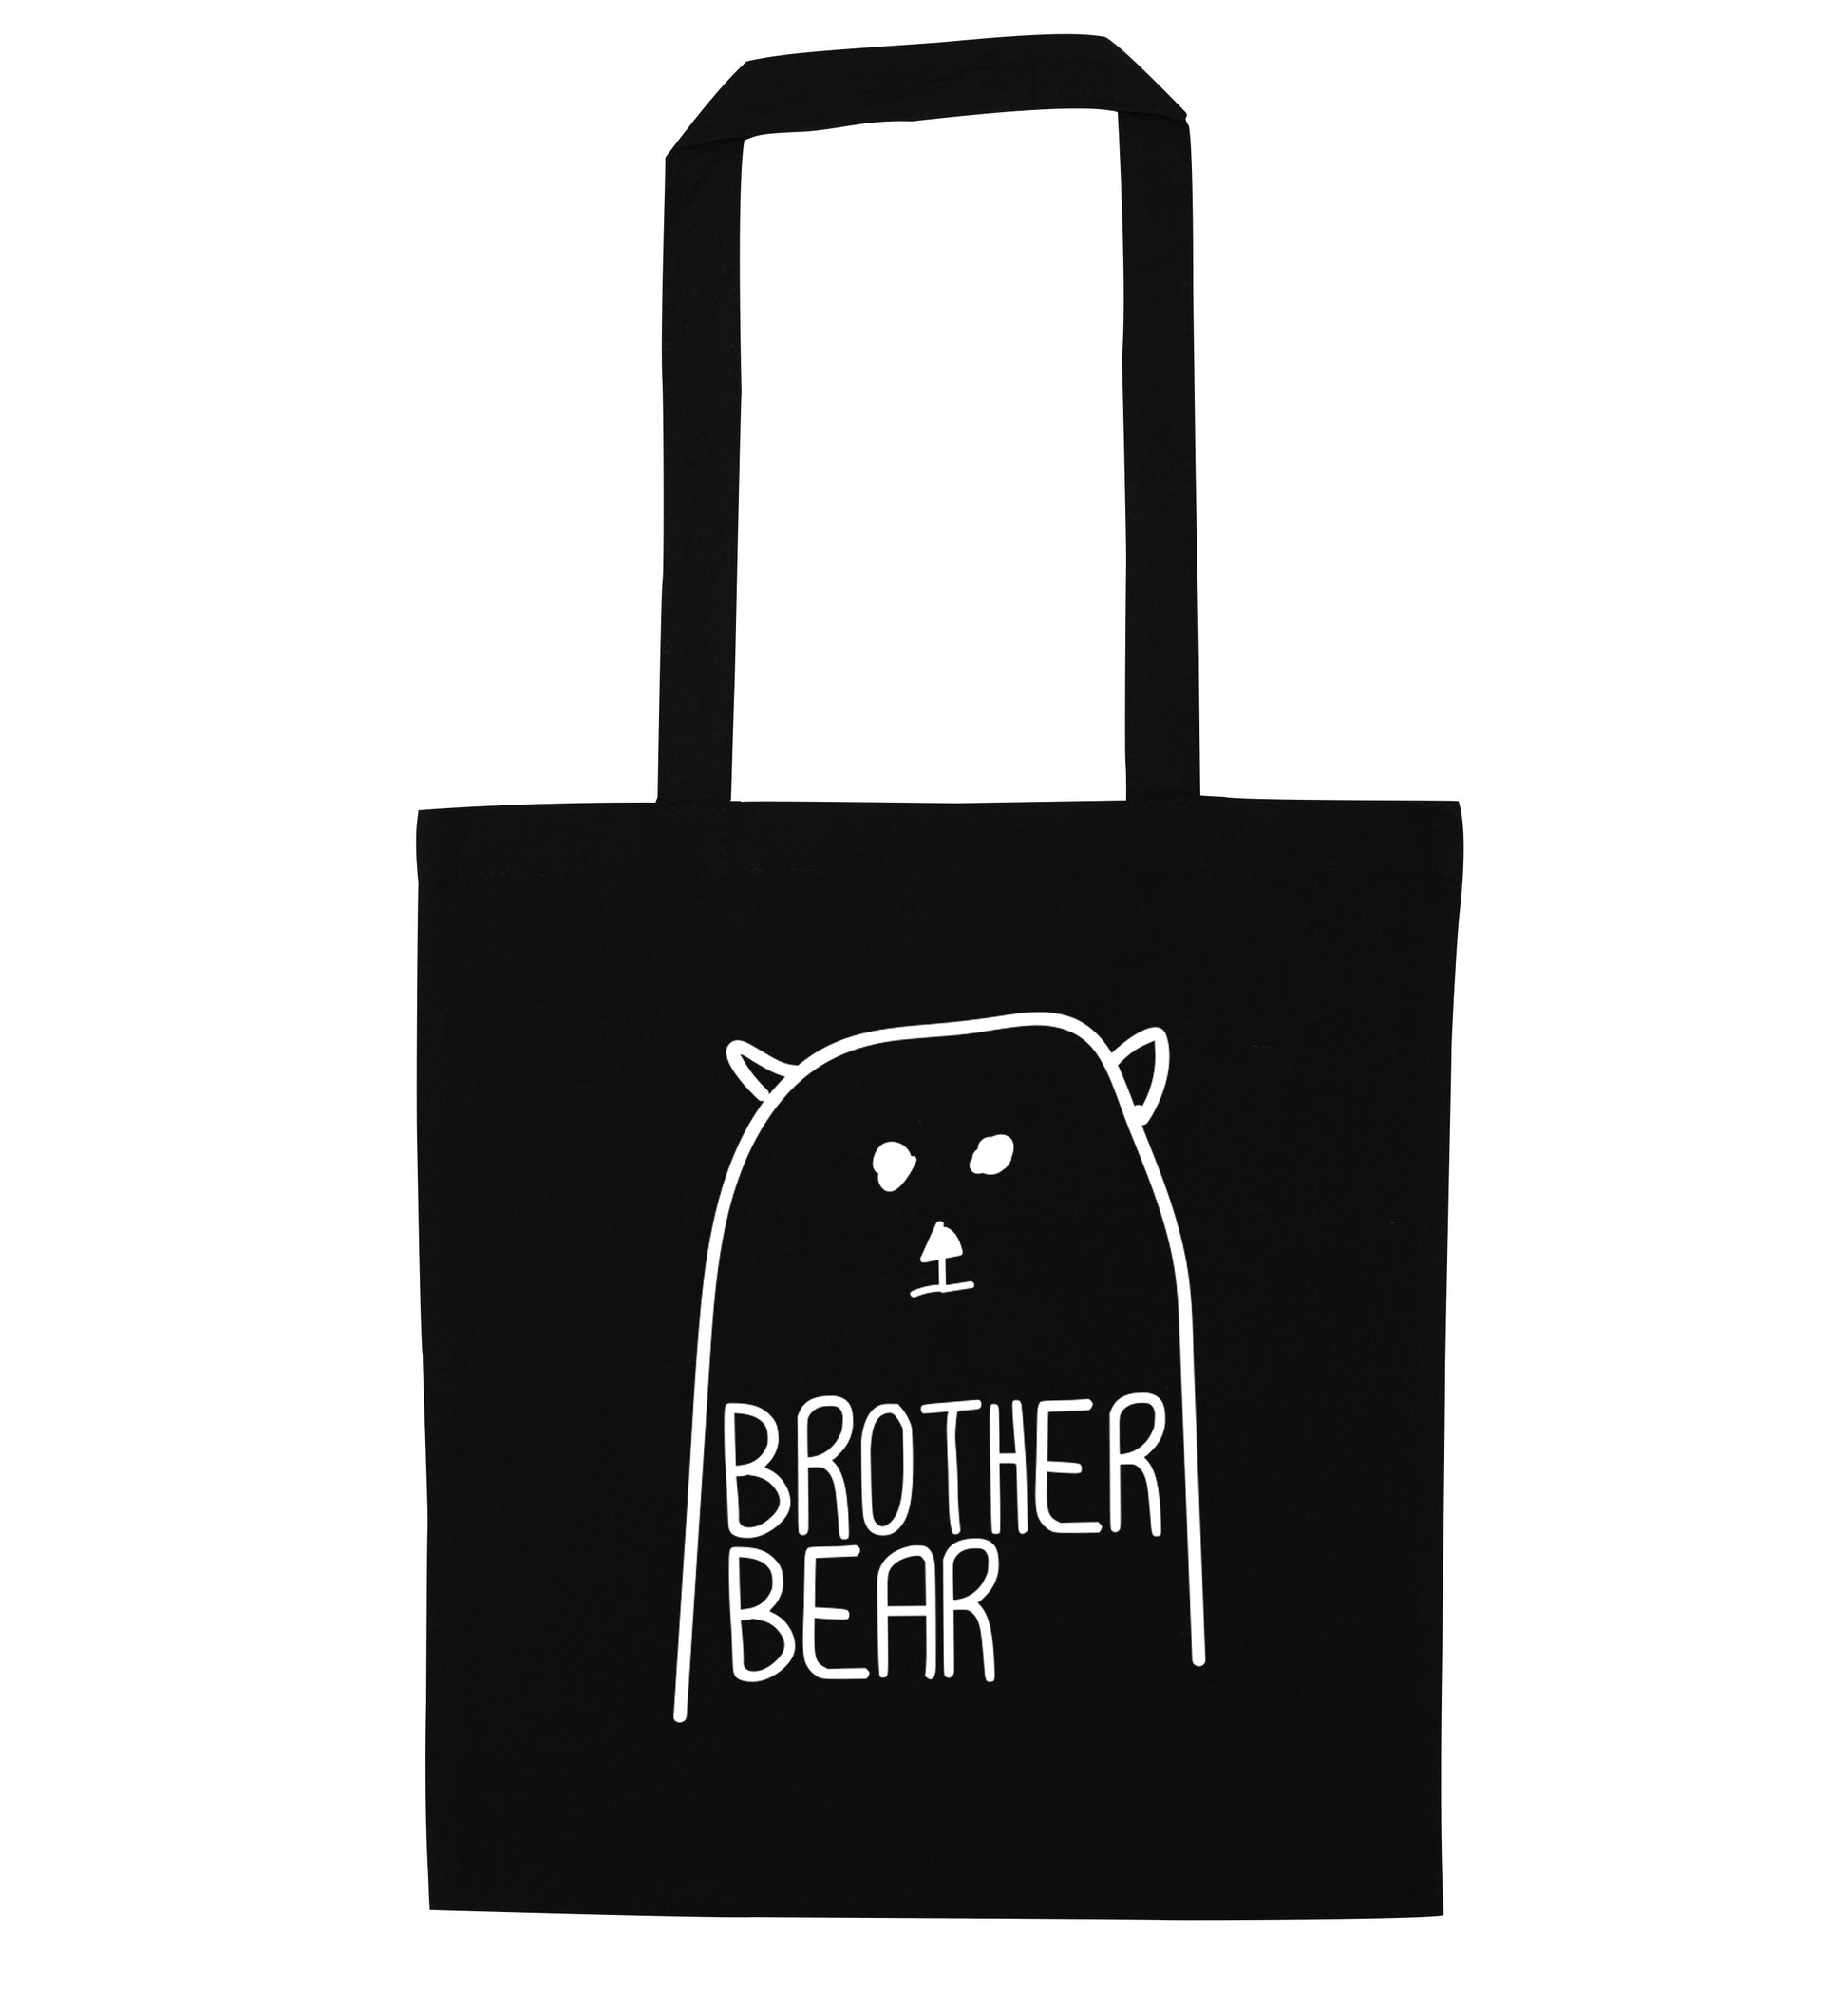 Brother bear black tote bag